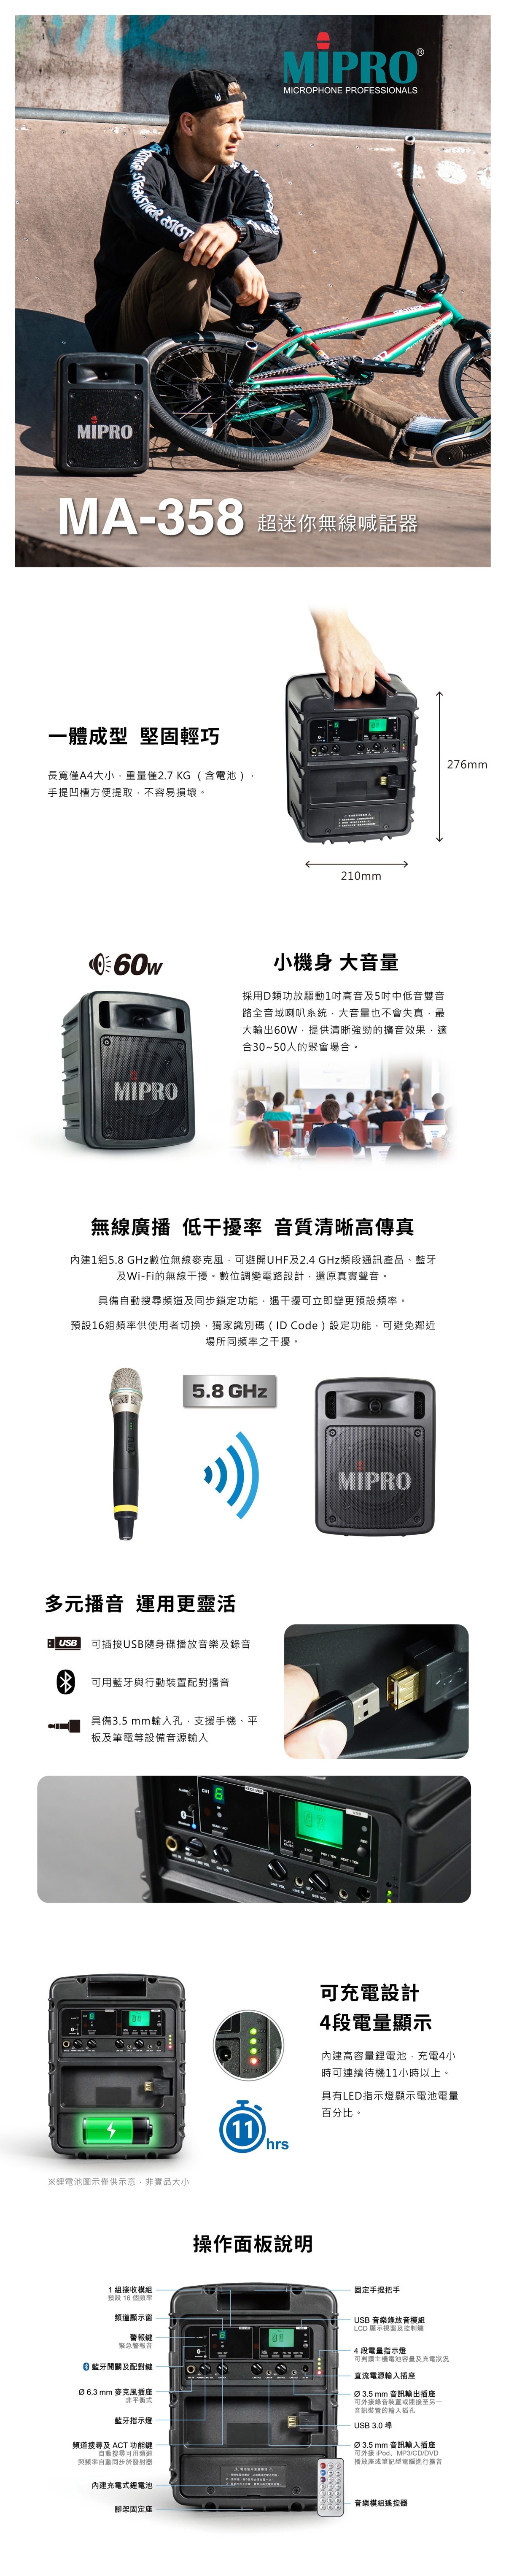 MIPRO 手提藍牙無線擴音機，採用D類功放驅動1吋高音及5吋中低雙音路全音域喇叭系統，最大輸出60W，內建1組5.8 GHz數位無線麥克風，可插接USB隨身碟，可用藍牙與行動裝置配對，具3.5mm輸入孔，支援手機、平板及筆電等。